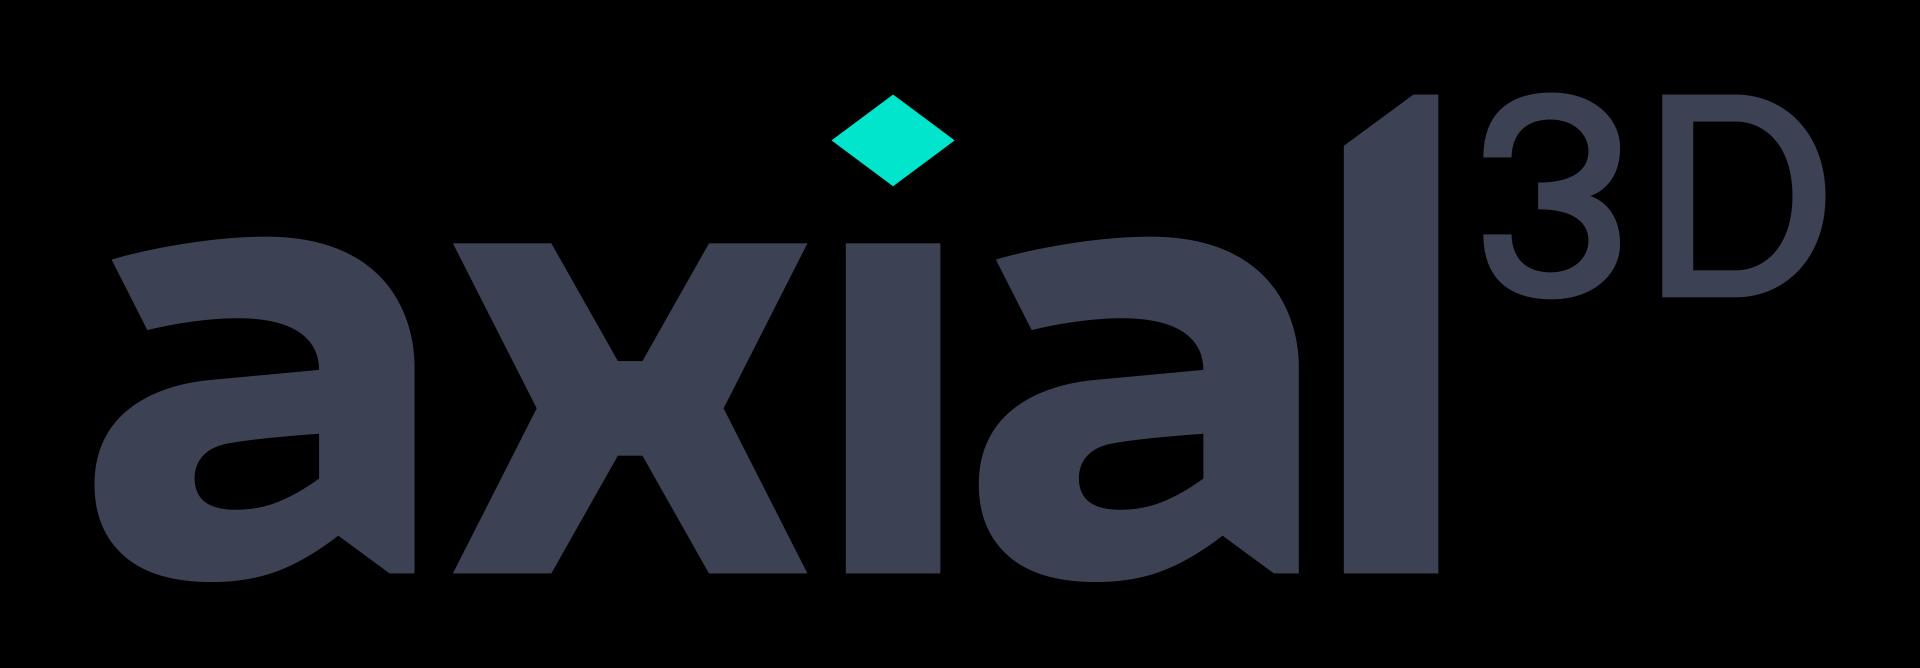 Axial3D_logo